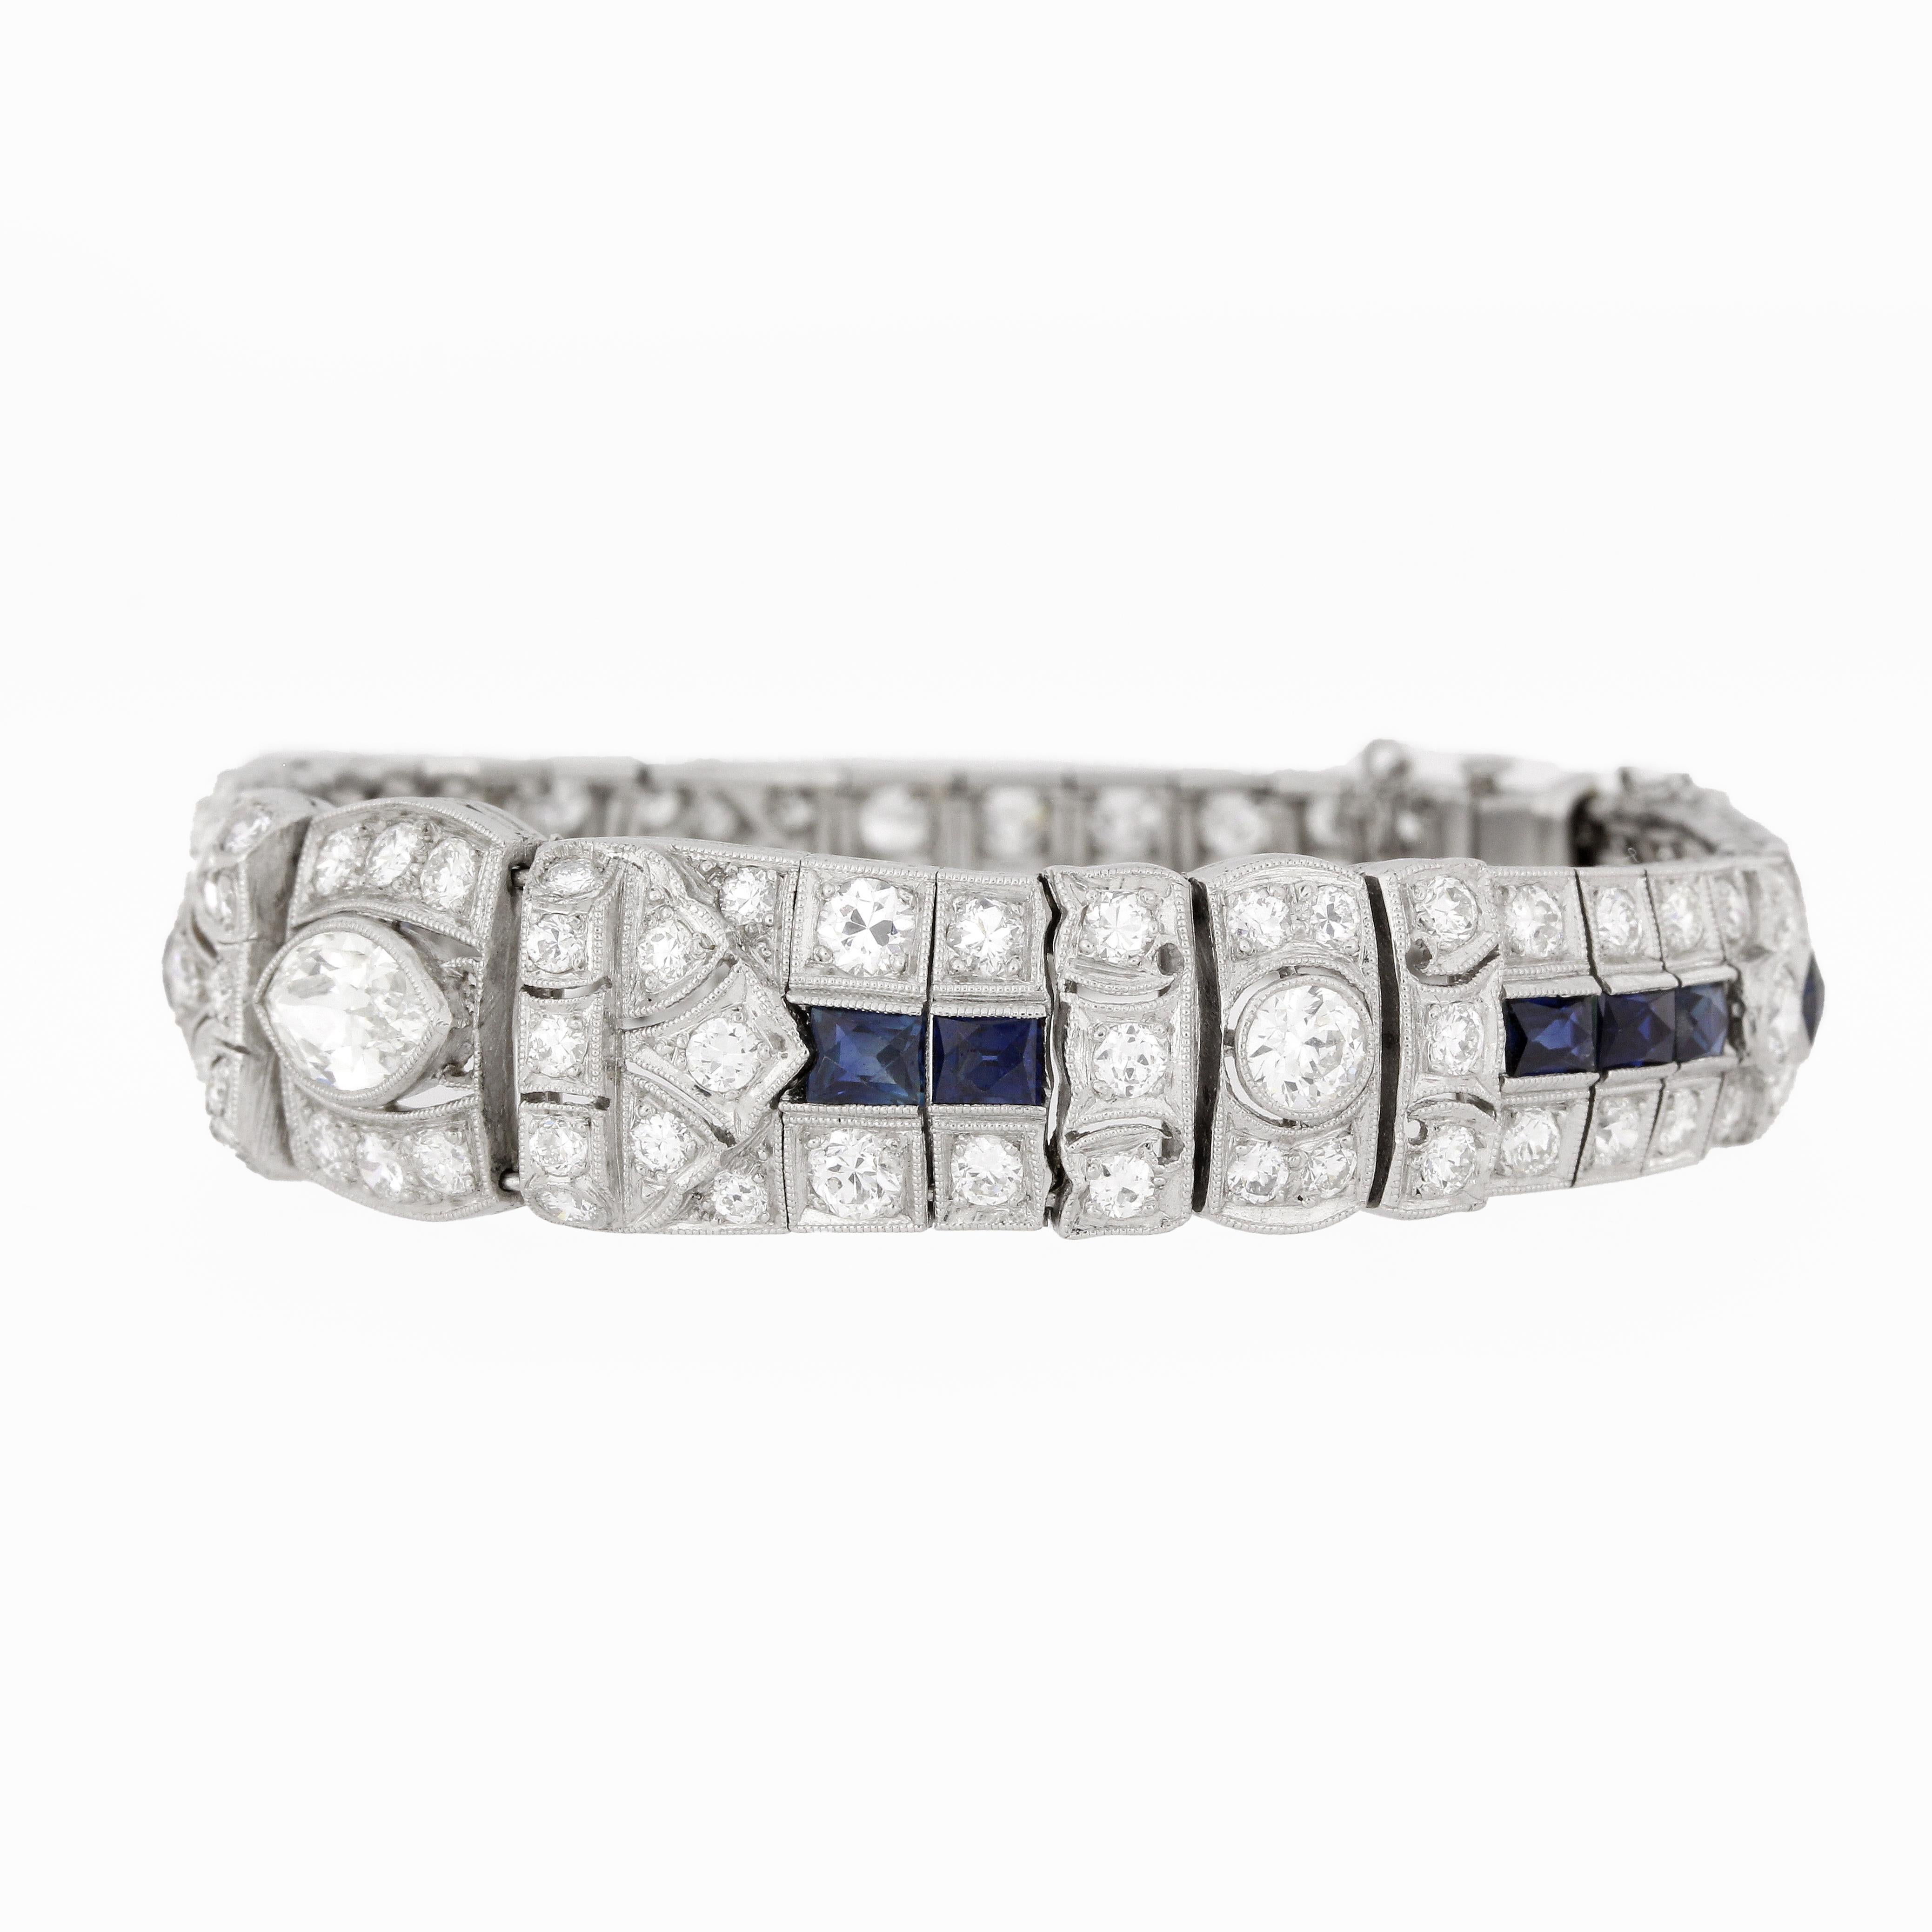 Platinum Art Deco Diamond Sapphire Bracelet
109 Diamonds
12 Sapphires
Approx. 12ct.